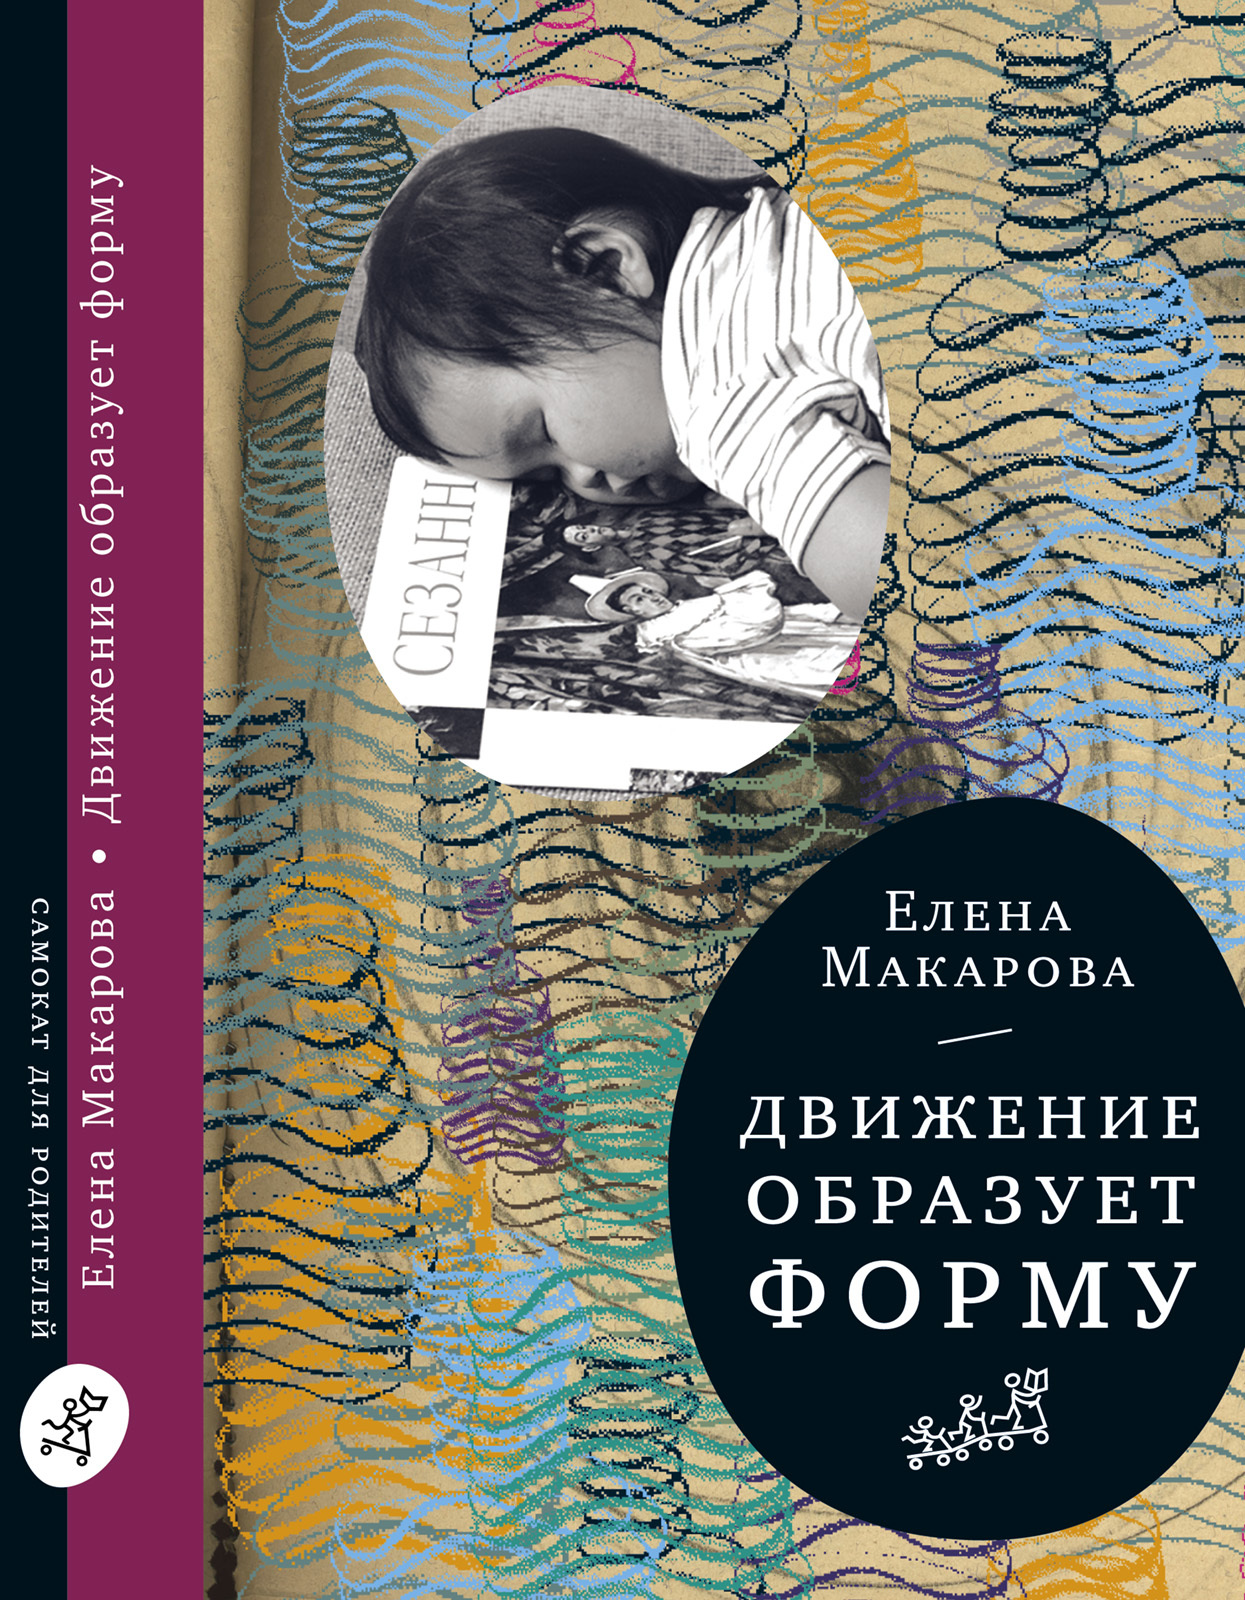 Book “Движение образует форму” by Елена Макарова